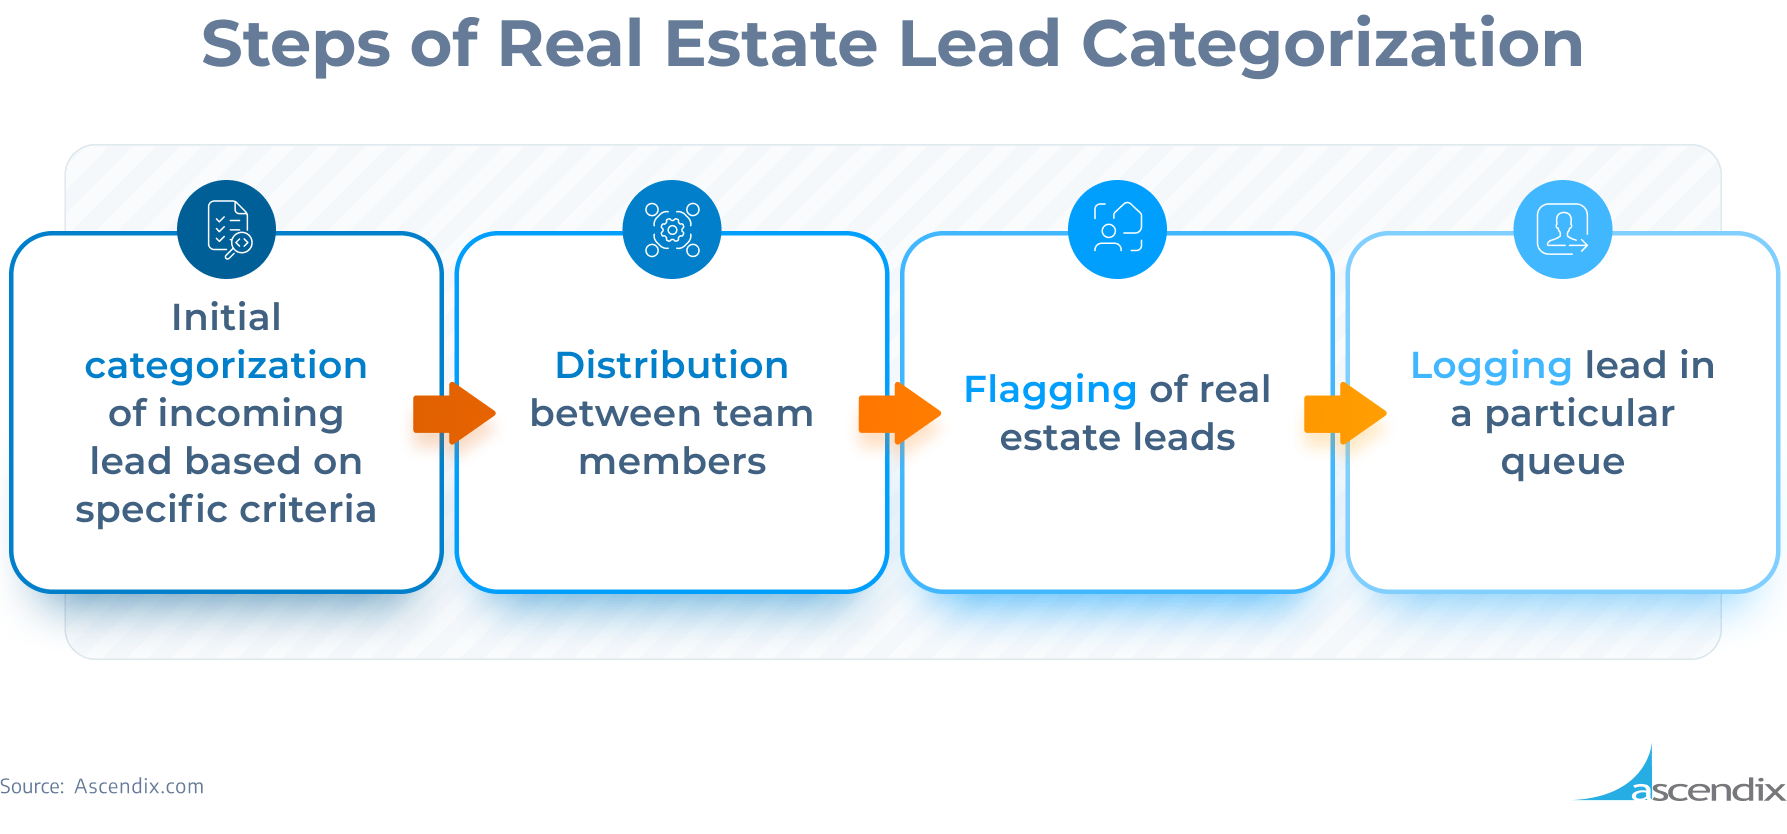 Steps of Real Estate Lead Categorization